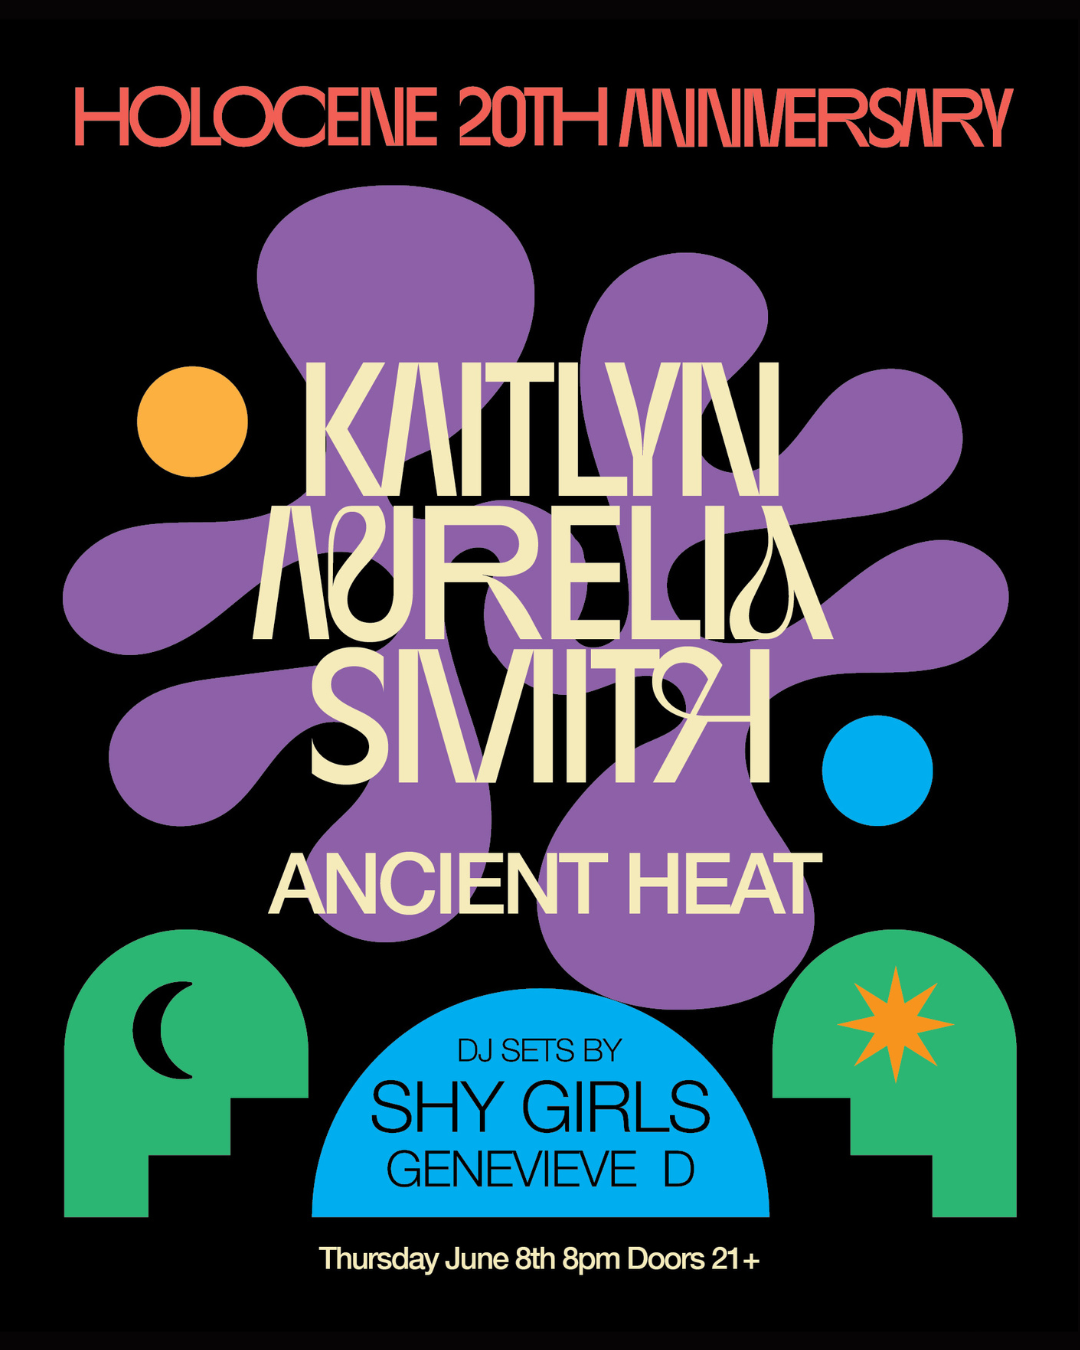 Holocene's 20th Anniversary! Kaitlyn Aurelia Smith, ANCIENT HEAT, SHY GIRLS (DJ), GENEVIEVE D - フライヤー表